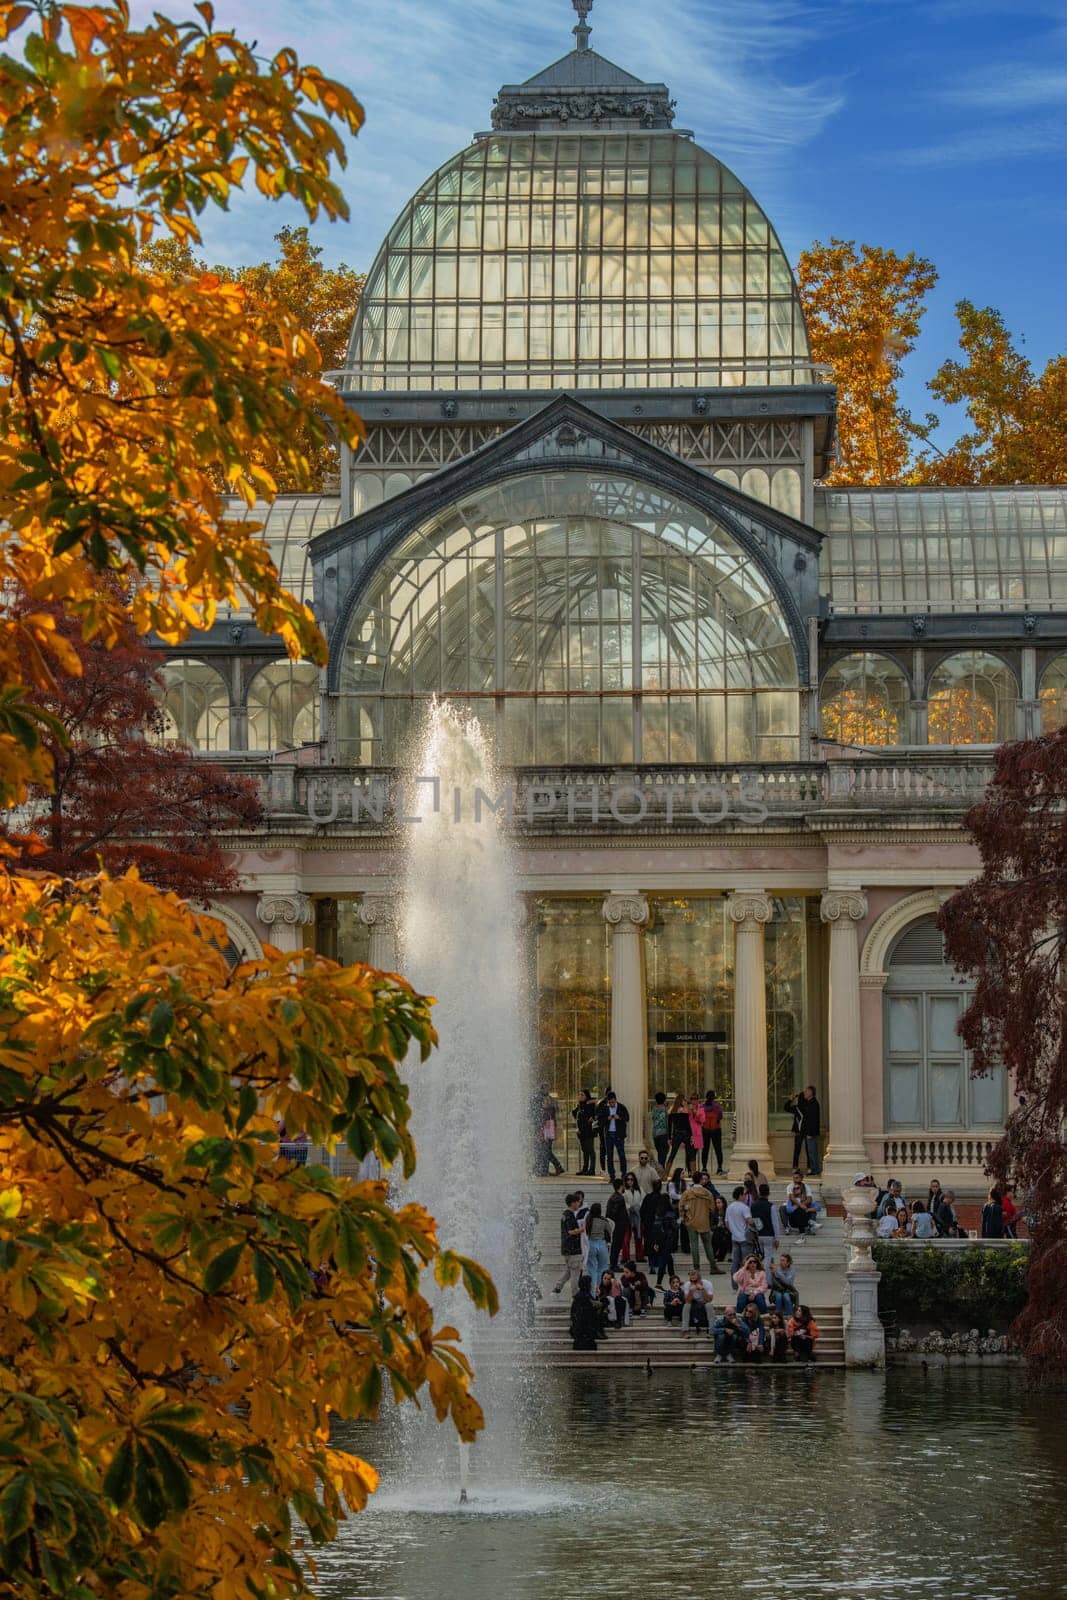 Palacio de Cristal in the Parque del Retiro, Madrid, Spain, High quality photo